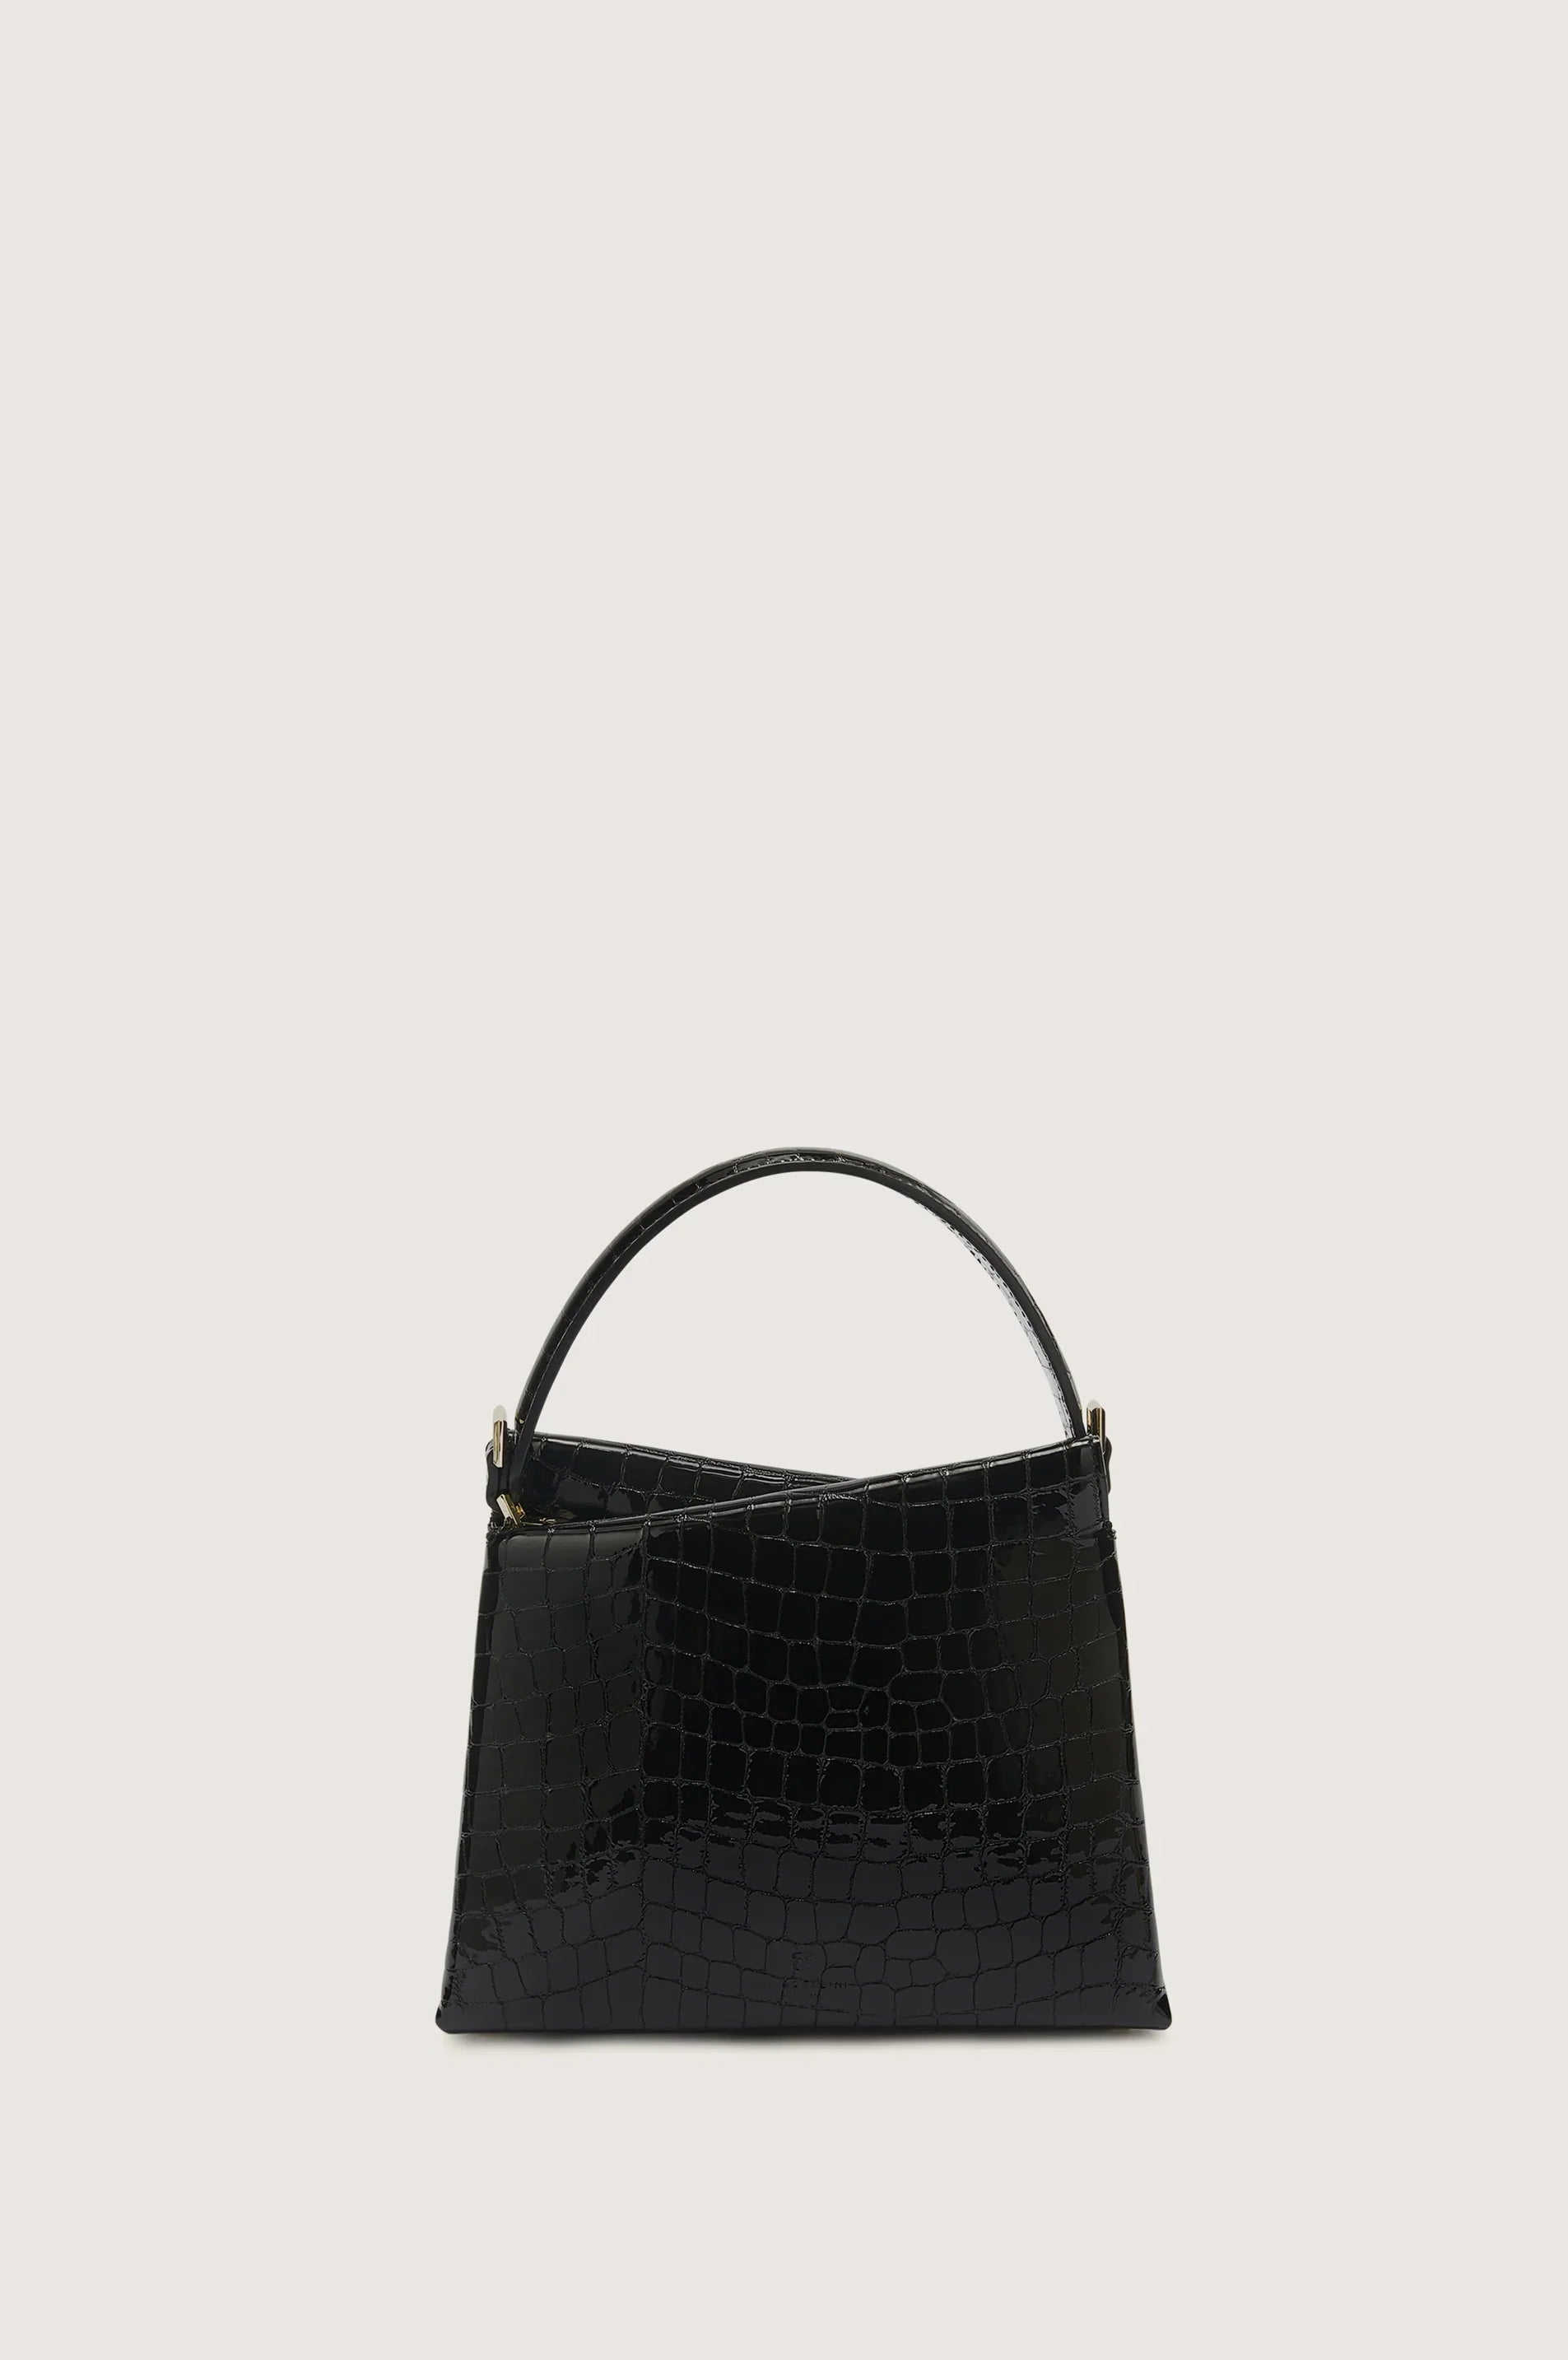 Lara Bellini Sailboat Geometric Handbag